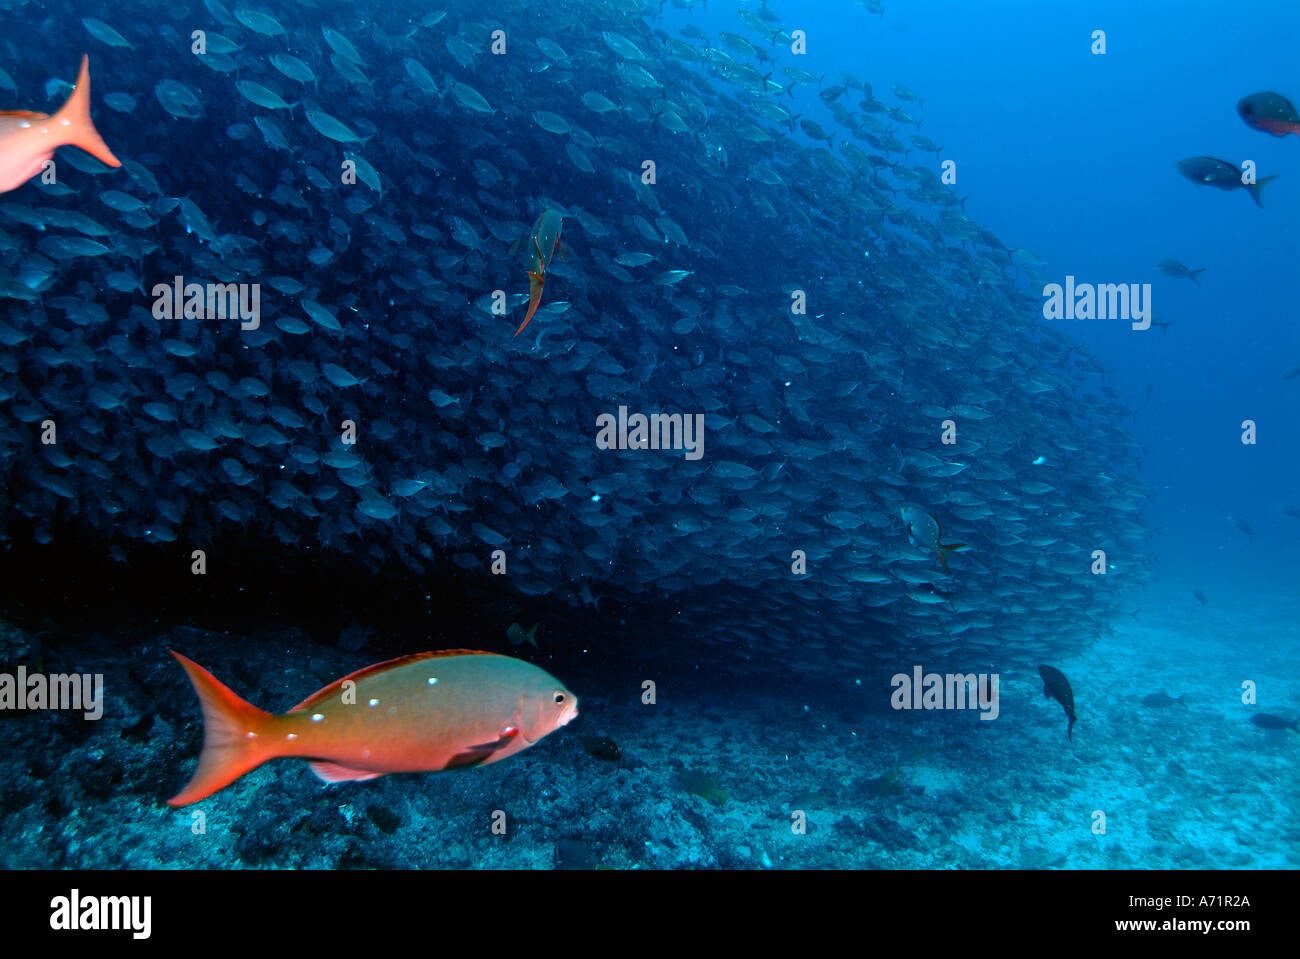 school of pacific chub mackerel in the Sea of Cortez Stock Photo